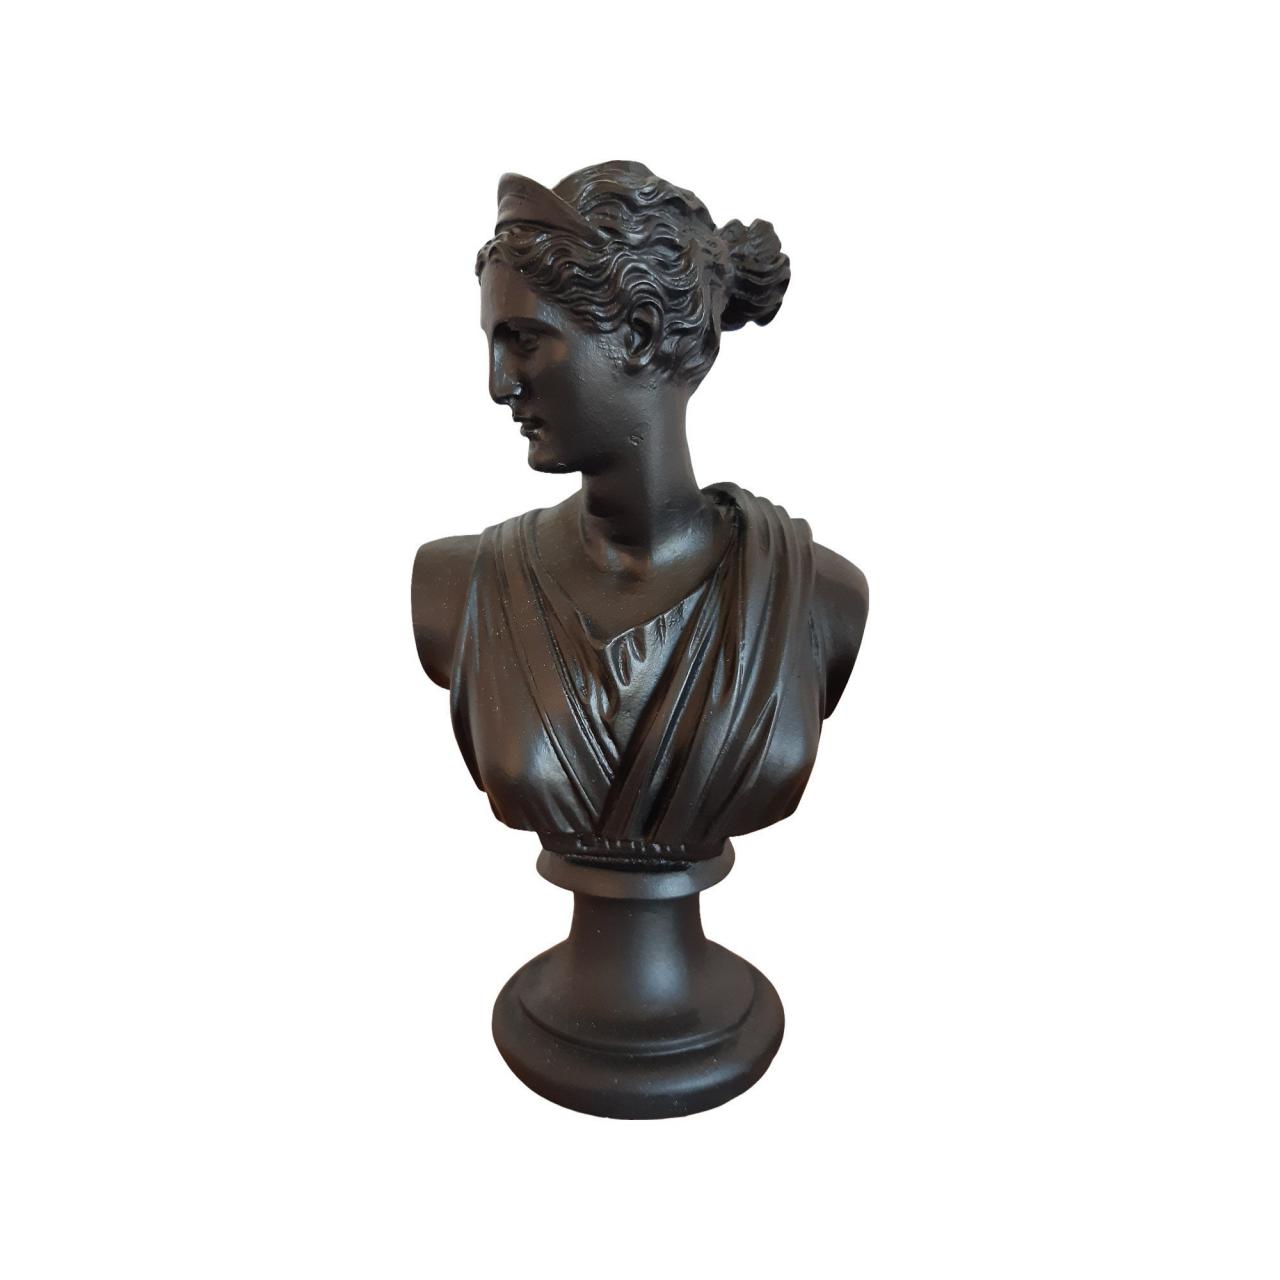 Artemis Diana Bust Statue - Handmade Alabaster Black Sculpture 15cm